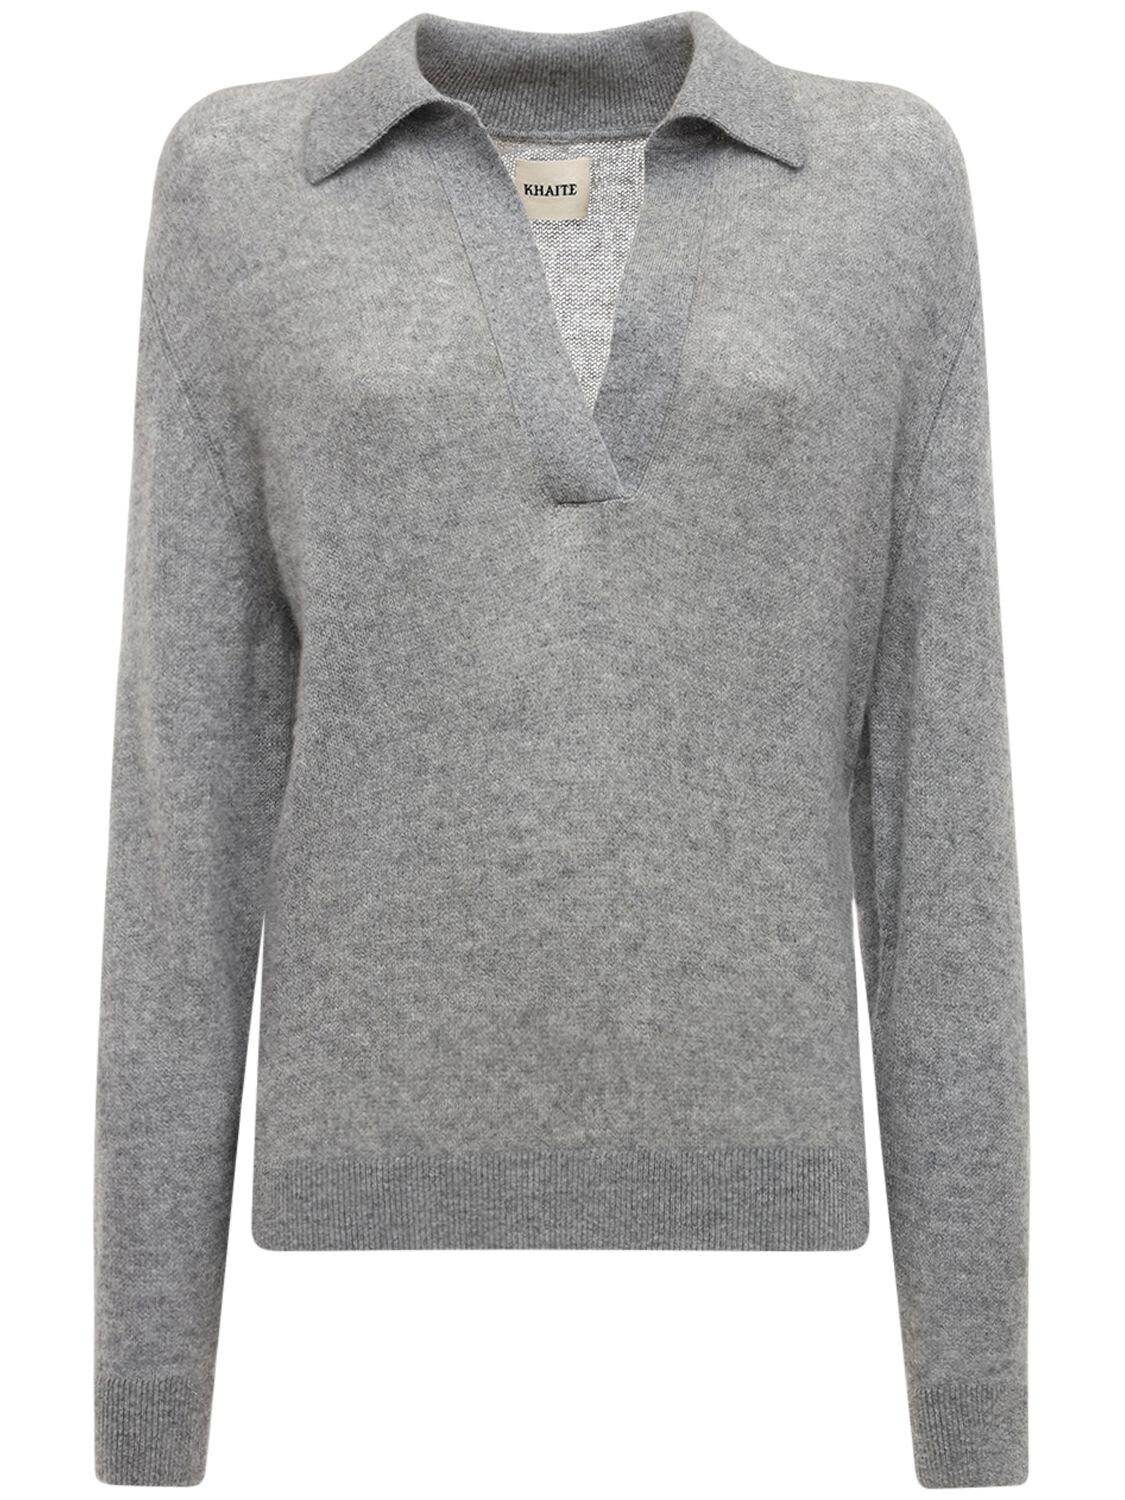 Khaite Jo Cashmere Knit Sweater in Grey (Gray) - Lyst